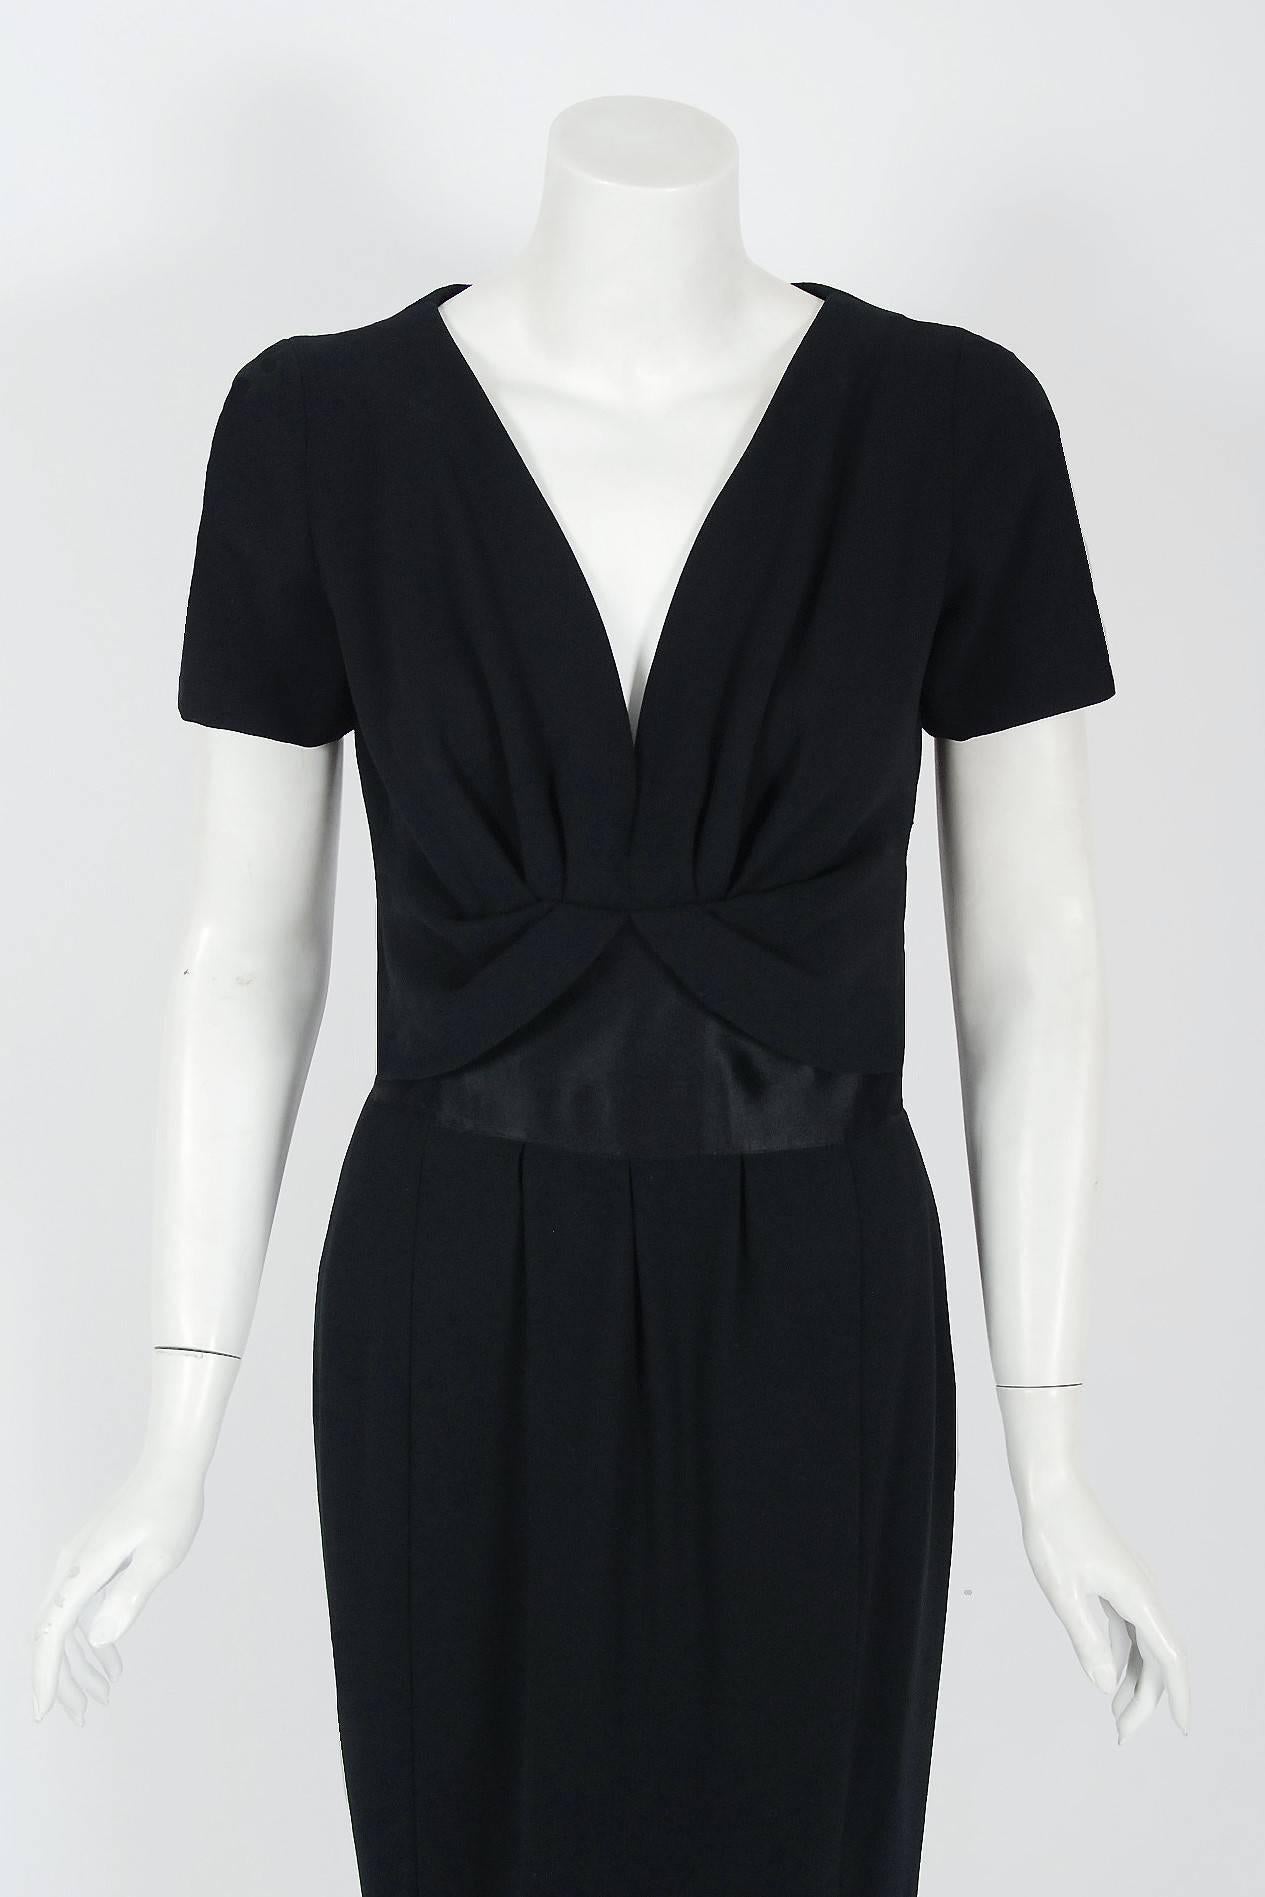 1955 Jean Patou Haute-Couture Black Wool & Satin Cocktail Wiggle Dress Ensemble 1